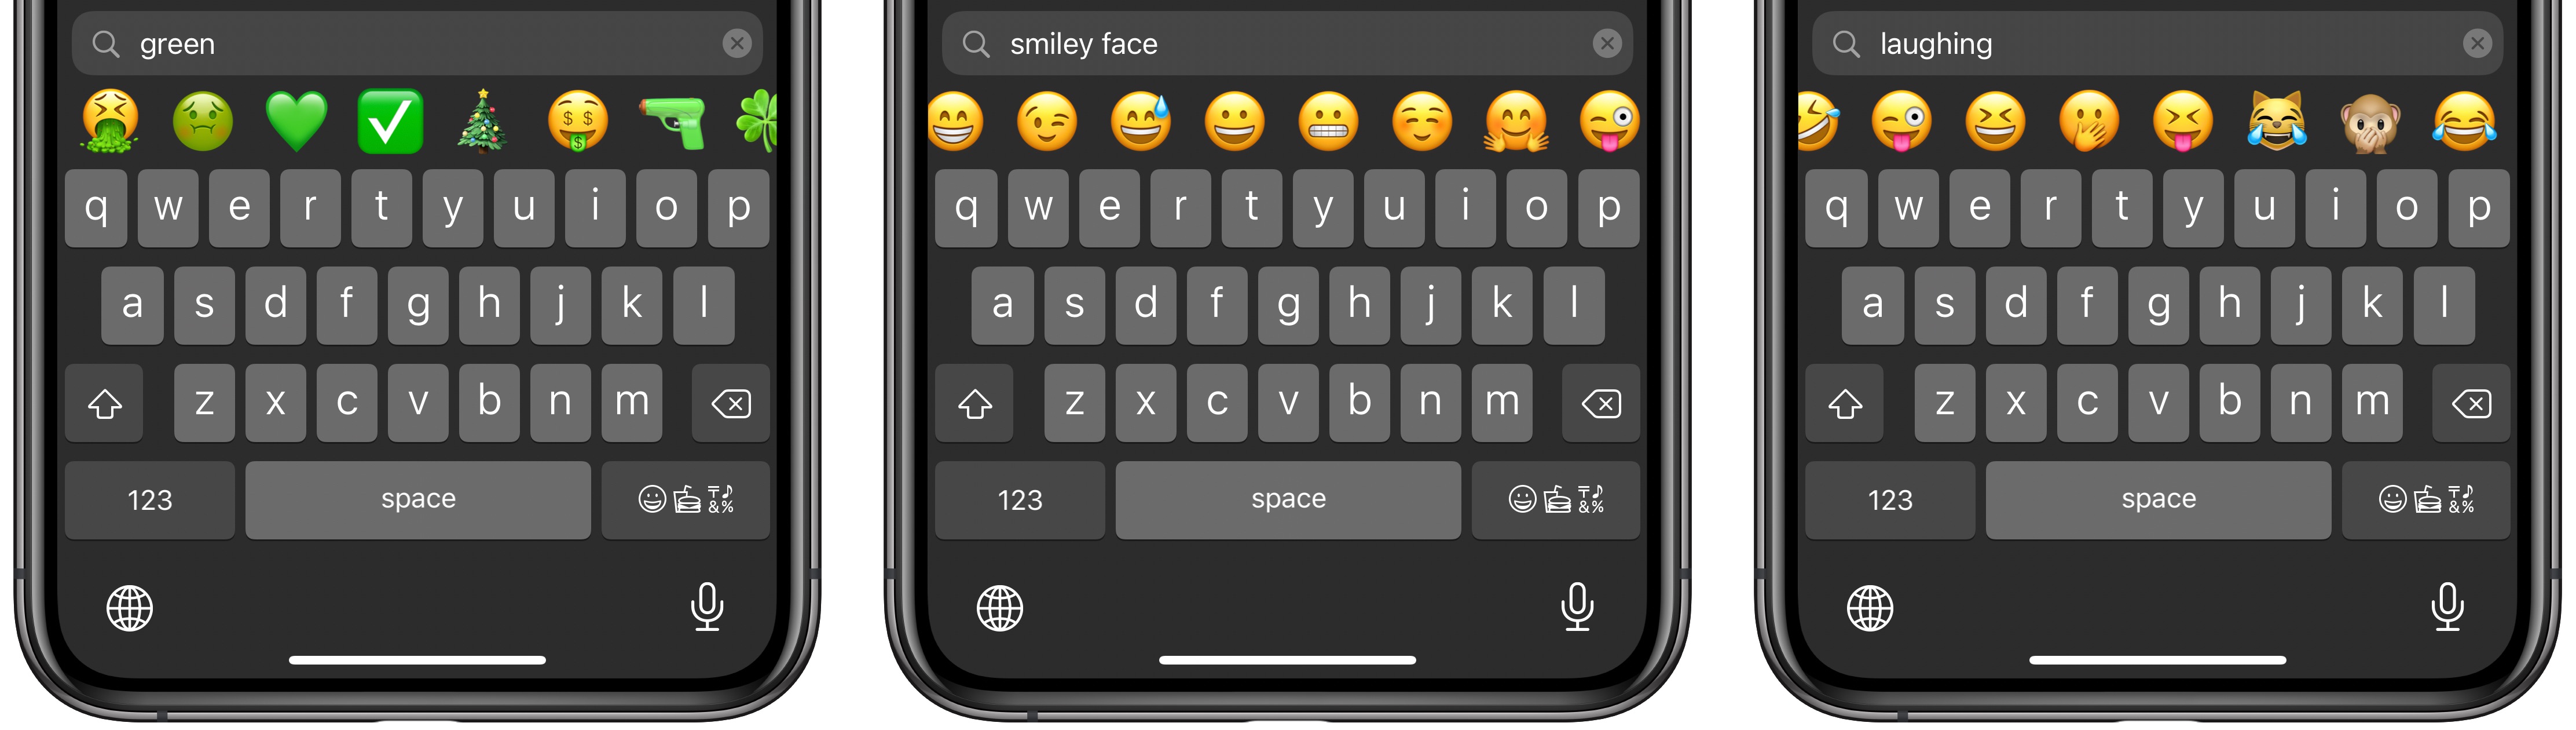 iPhone emoji search - example screenshot 2